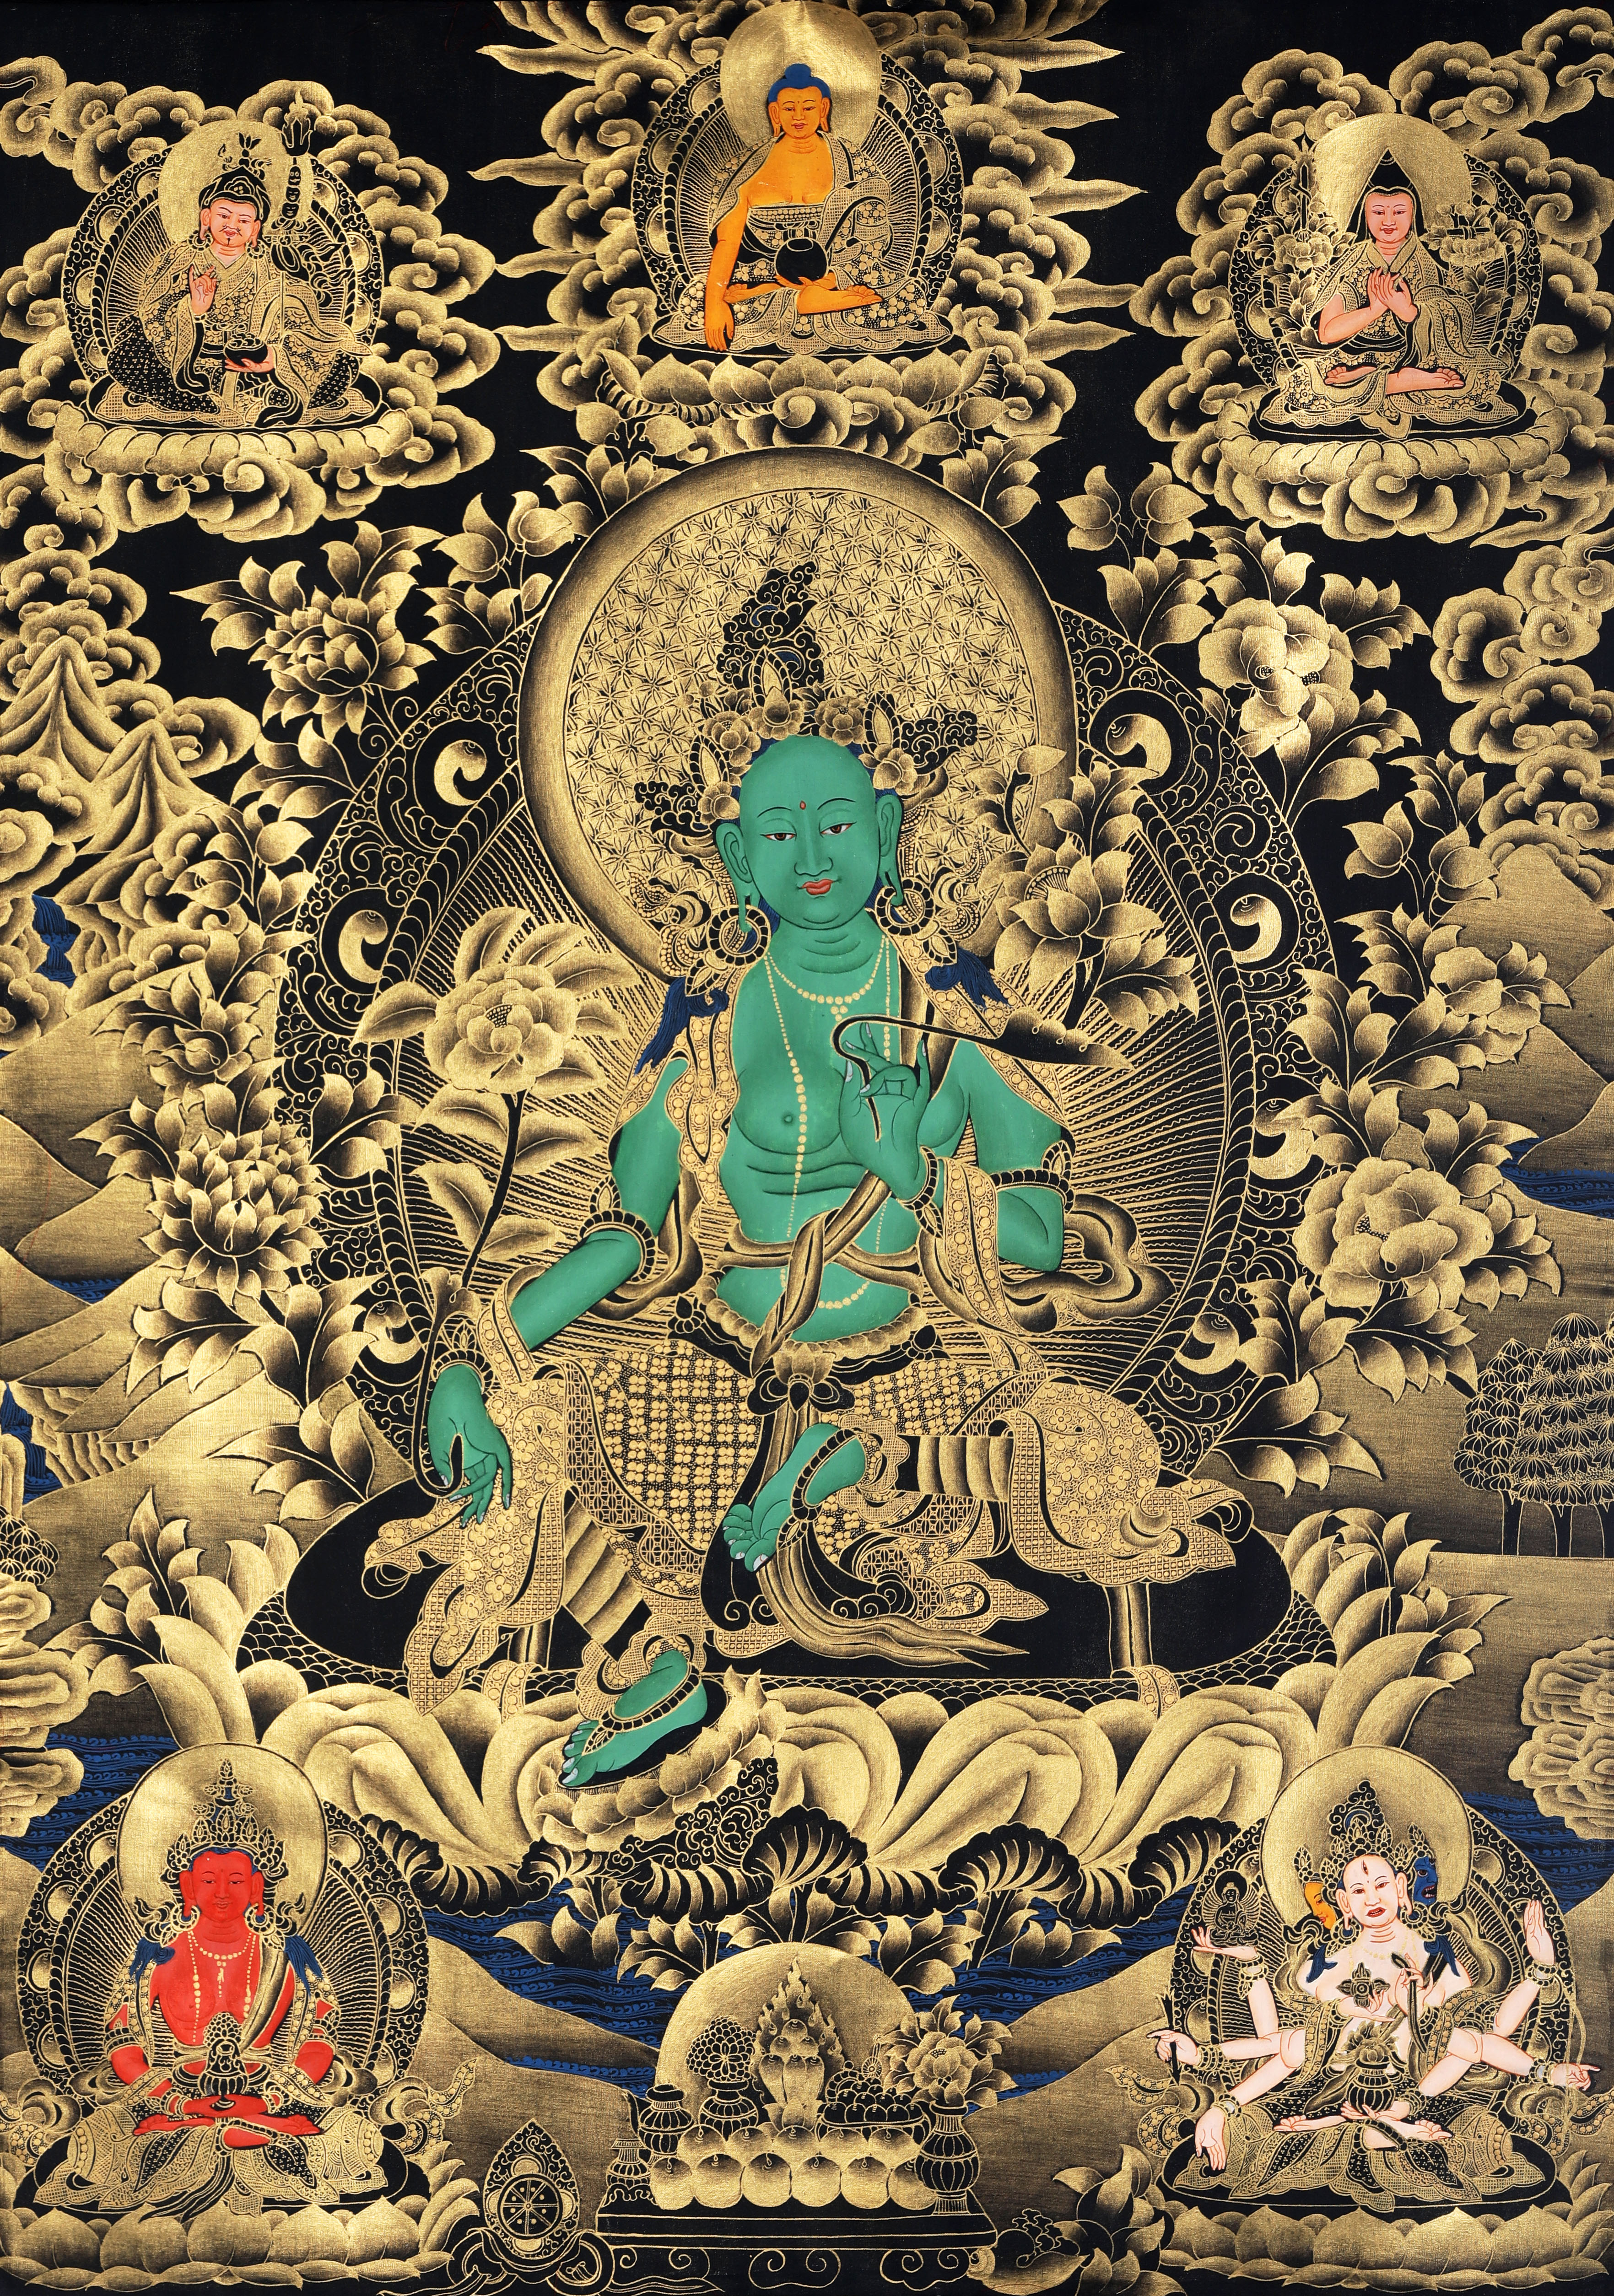 Large Size Four-Armed Avalokiteshvara (Tibetan Buddhist Deity)